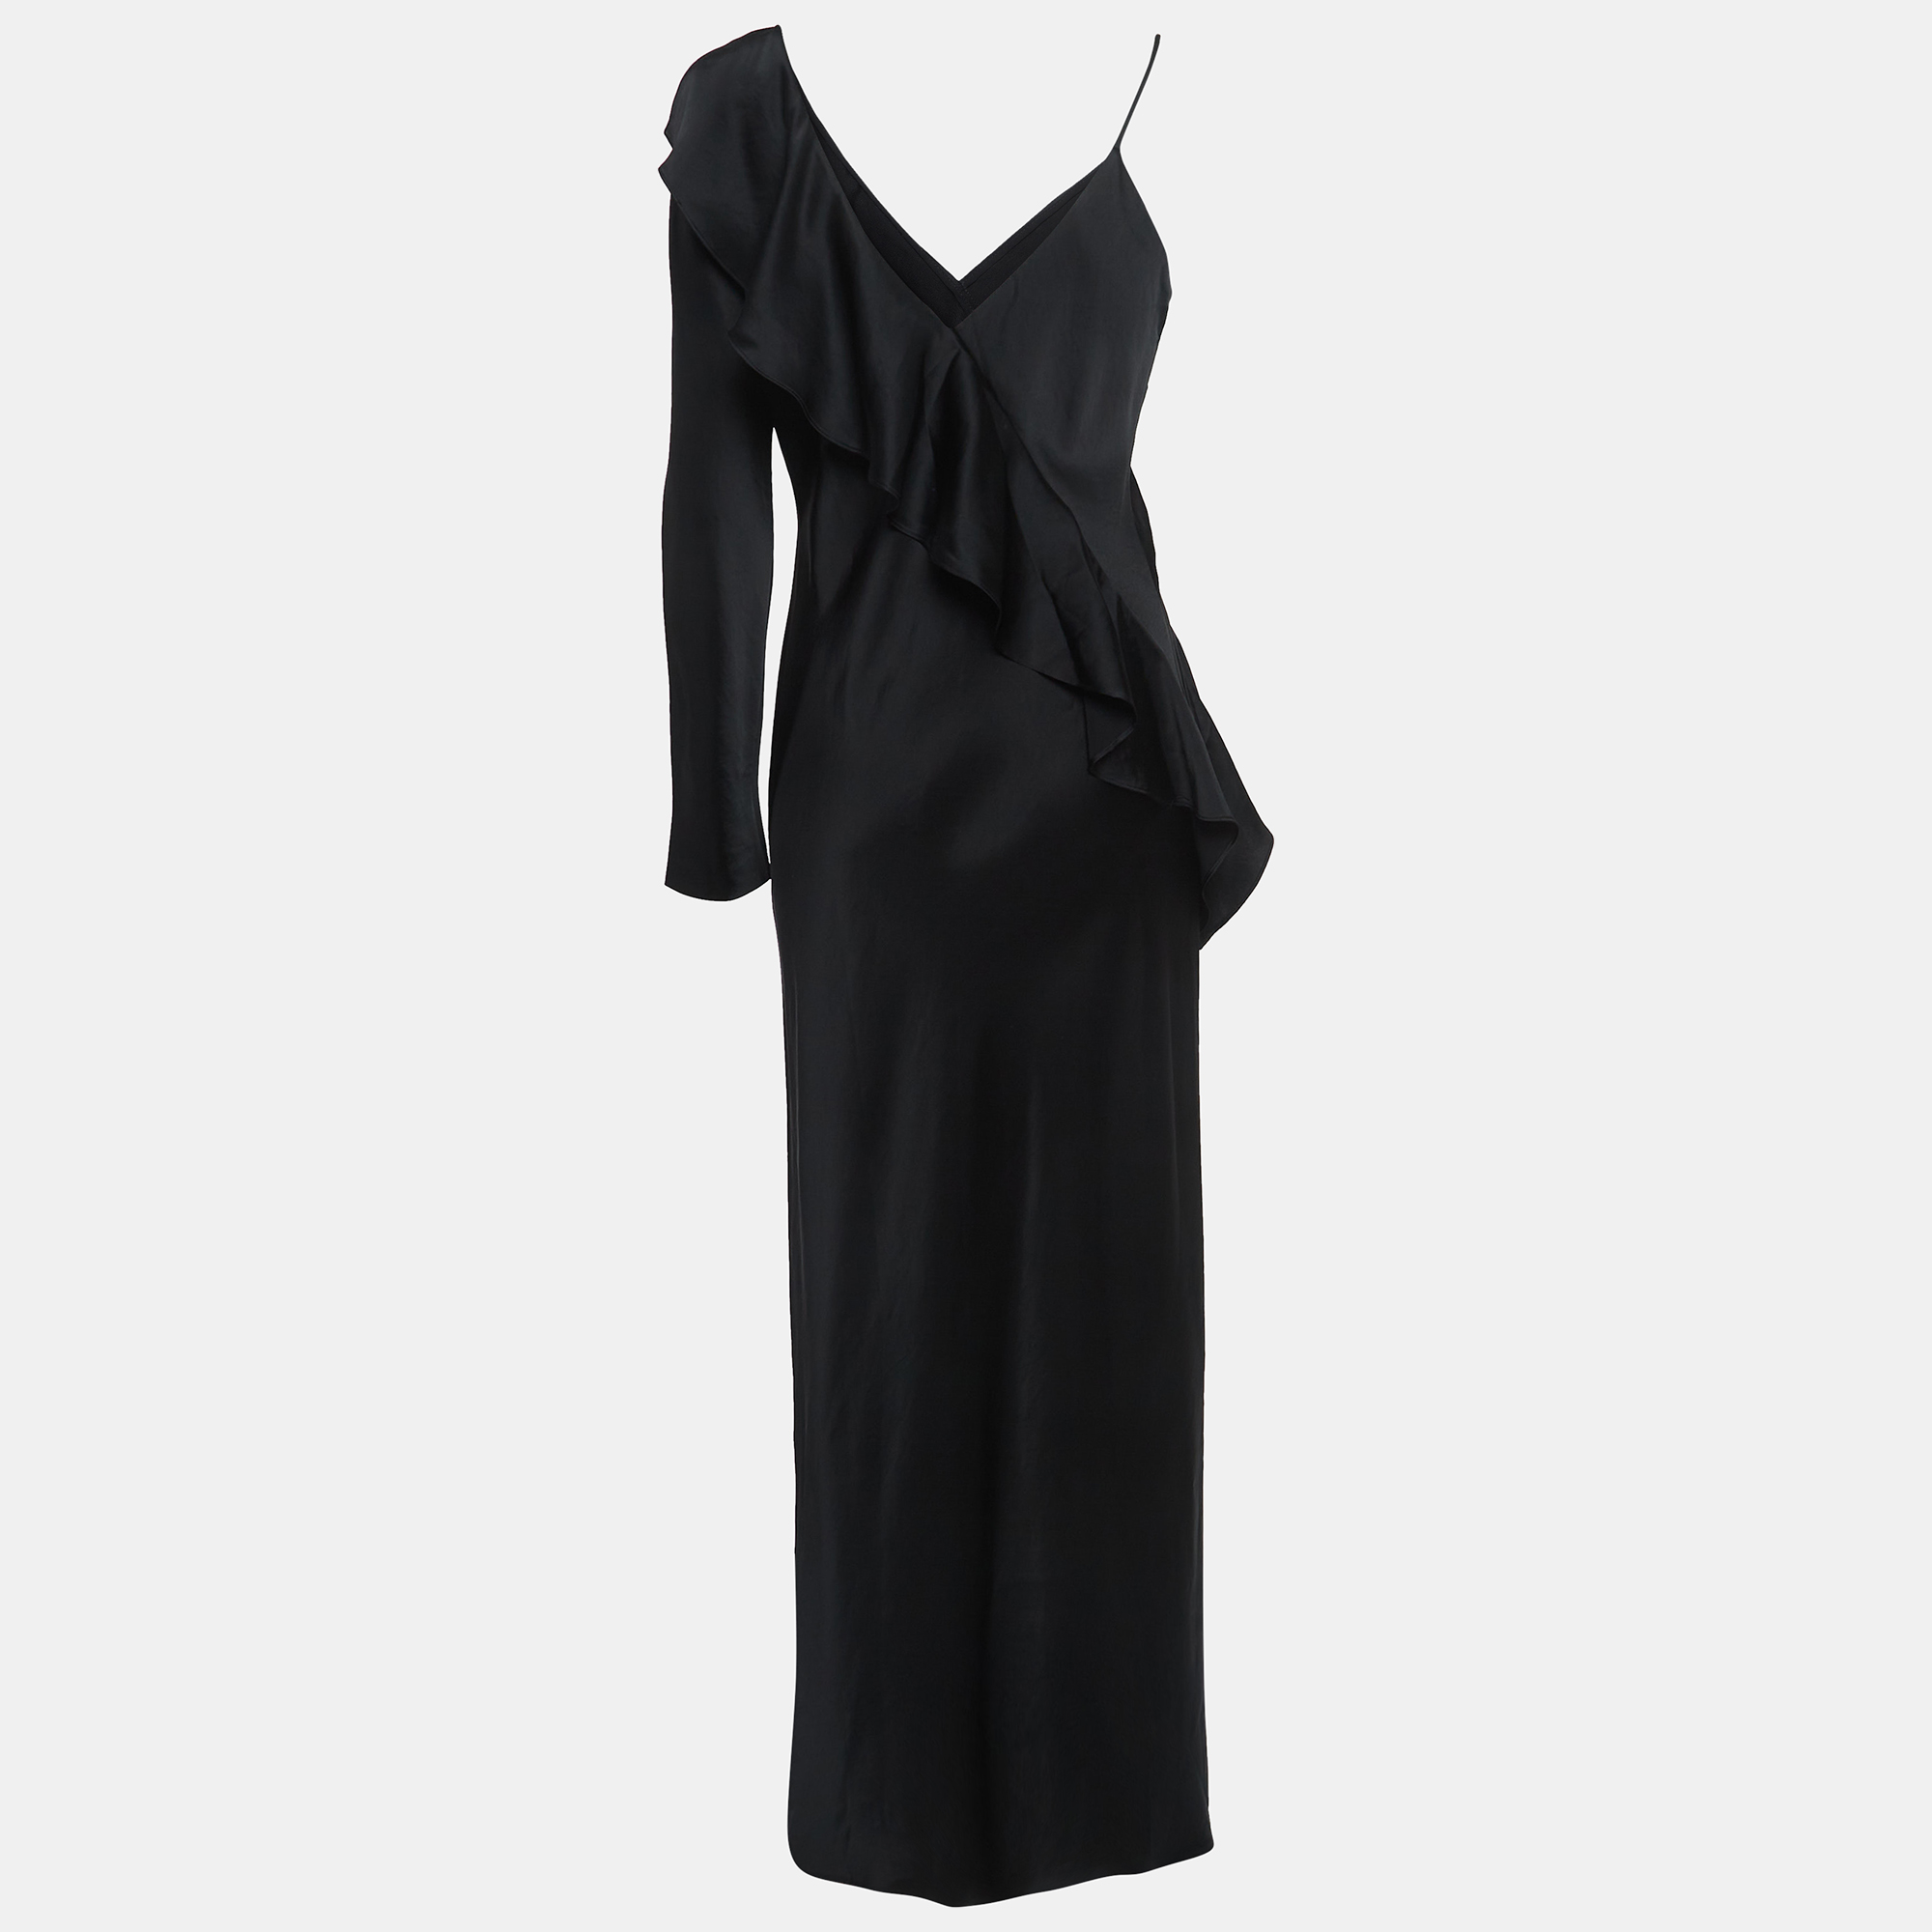 Diane von furstenberg black satin asymmetric sleeve ruffled maxi dress m